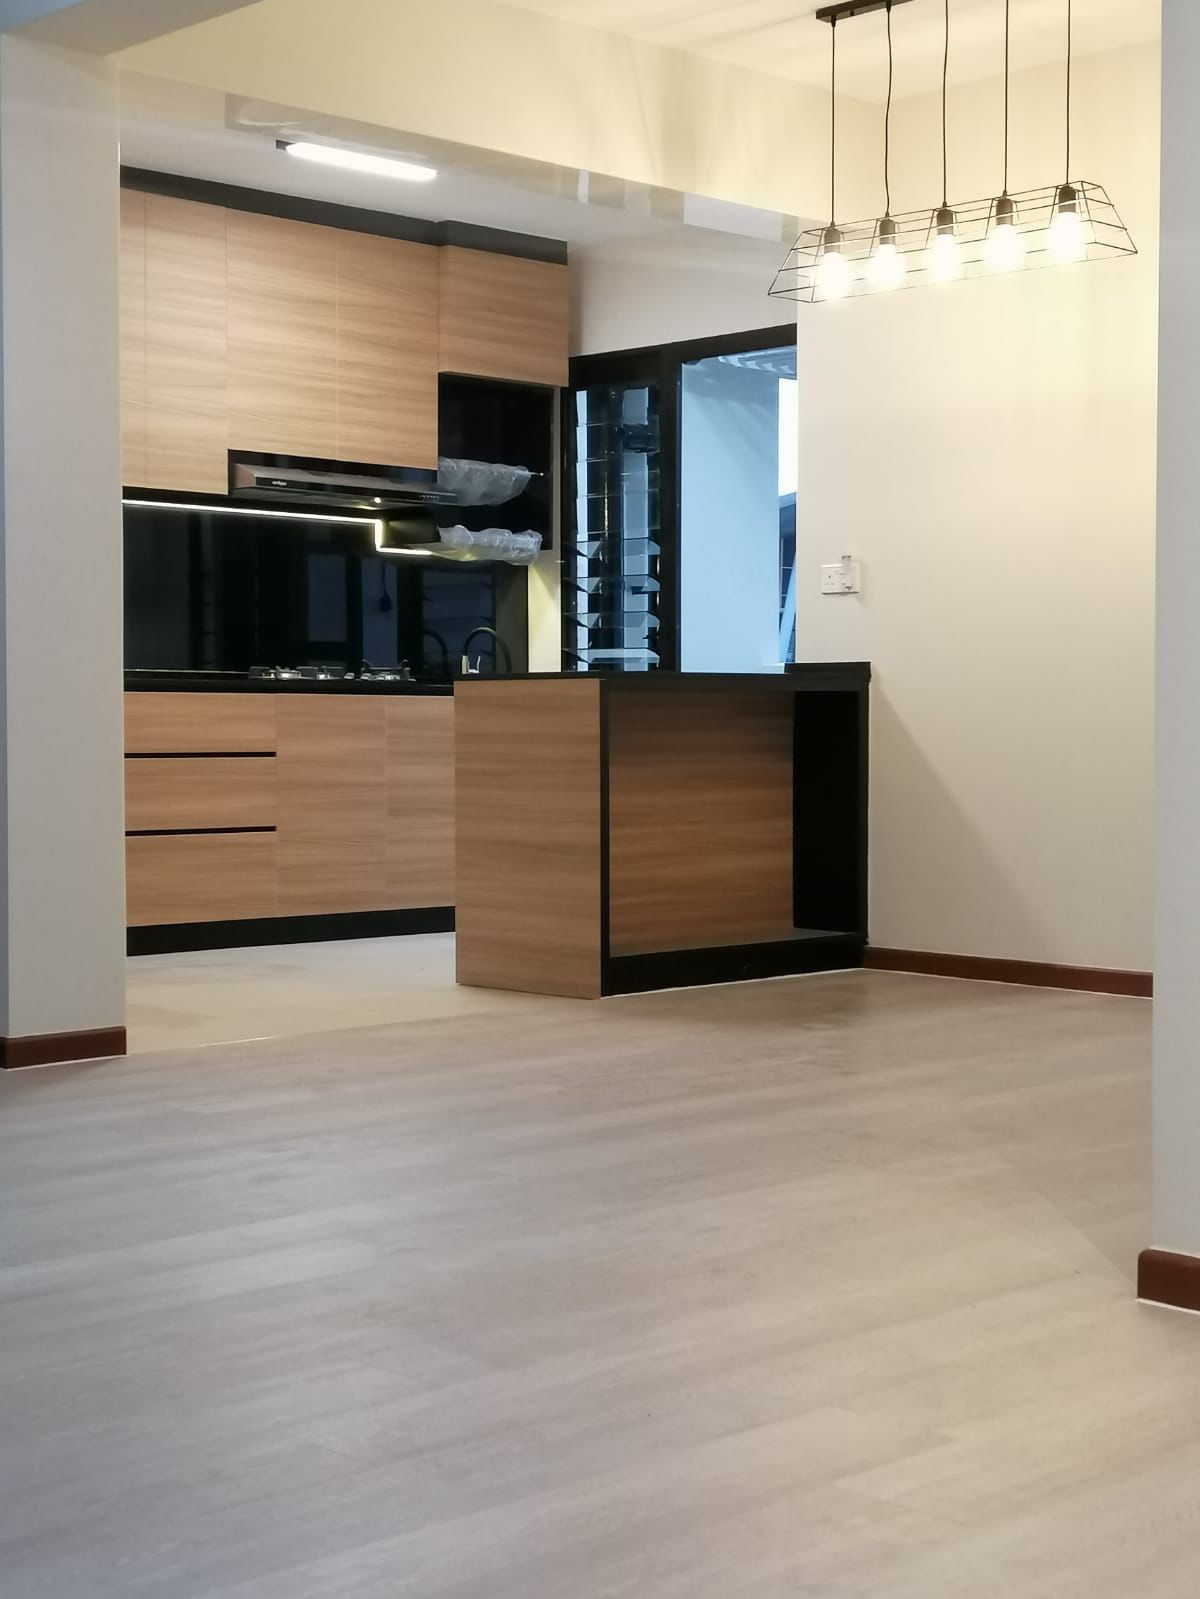 vinyl flooring kitchen